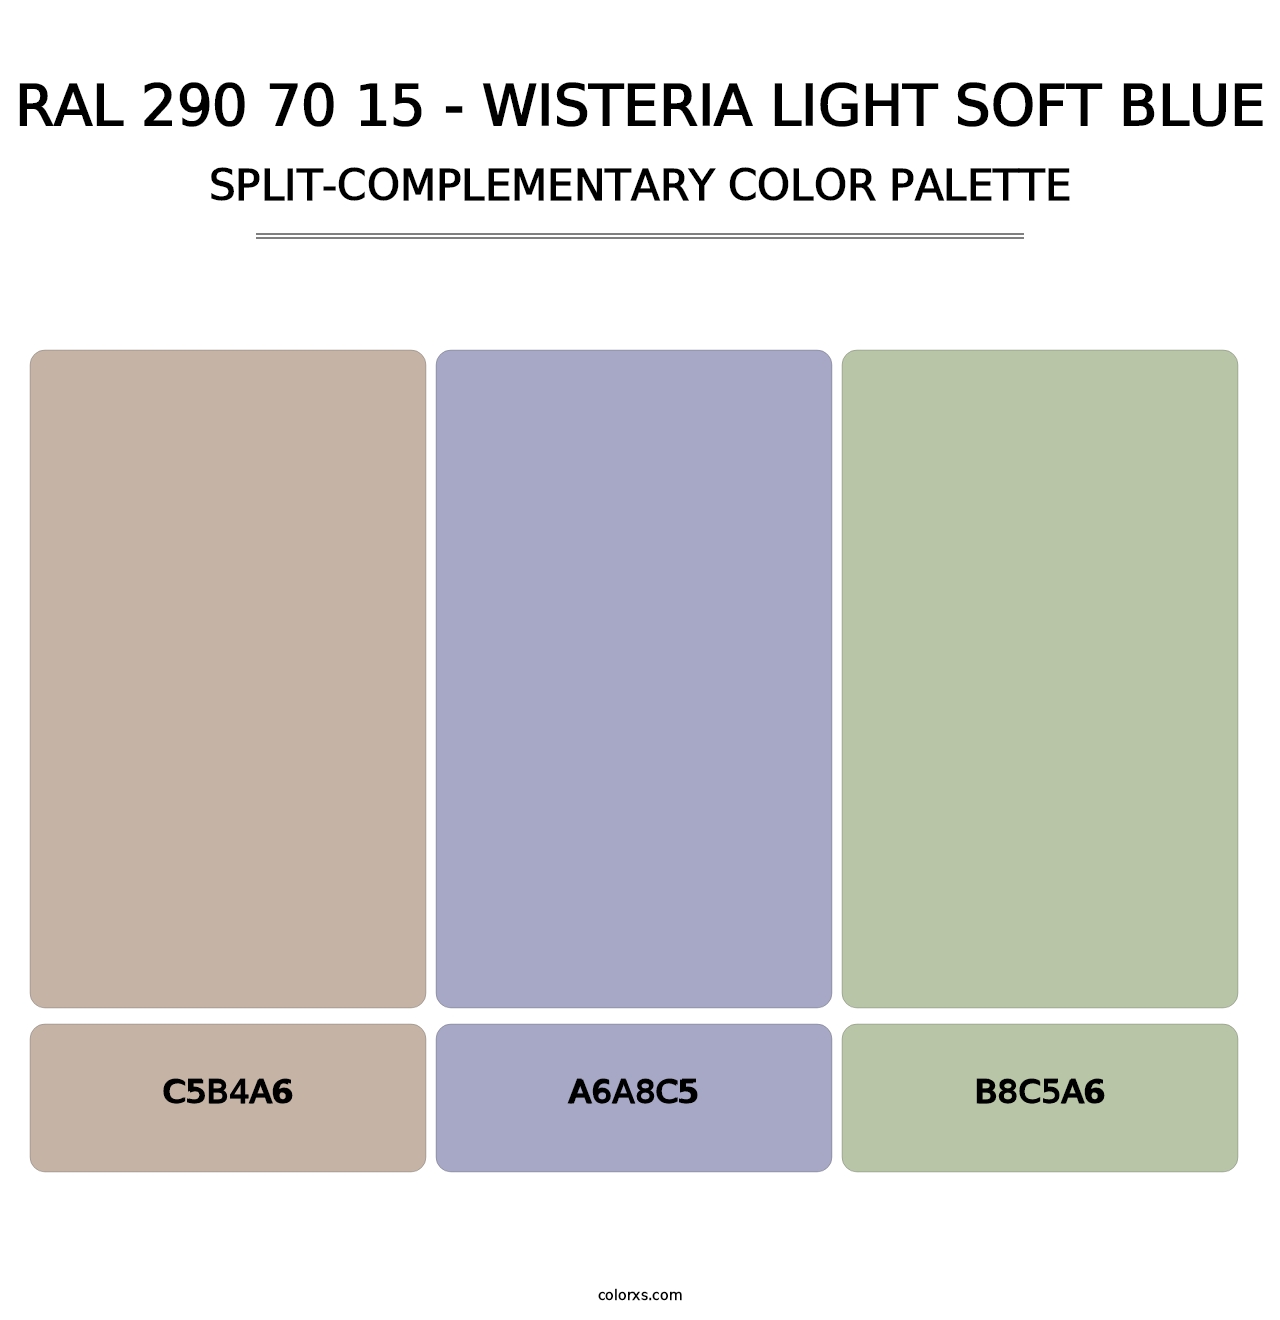 RAL 290 70 15 - Wisteria Light Soft Blue - Split-Complementary Color Palette